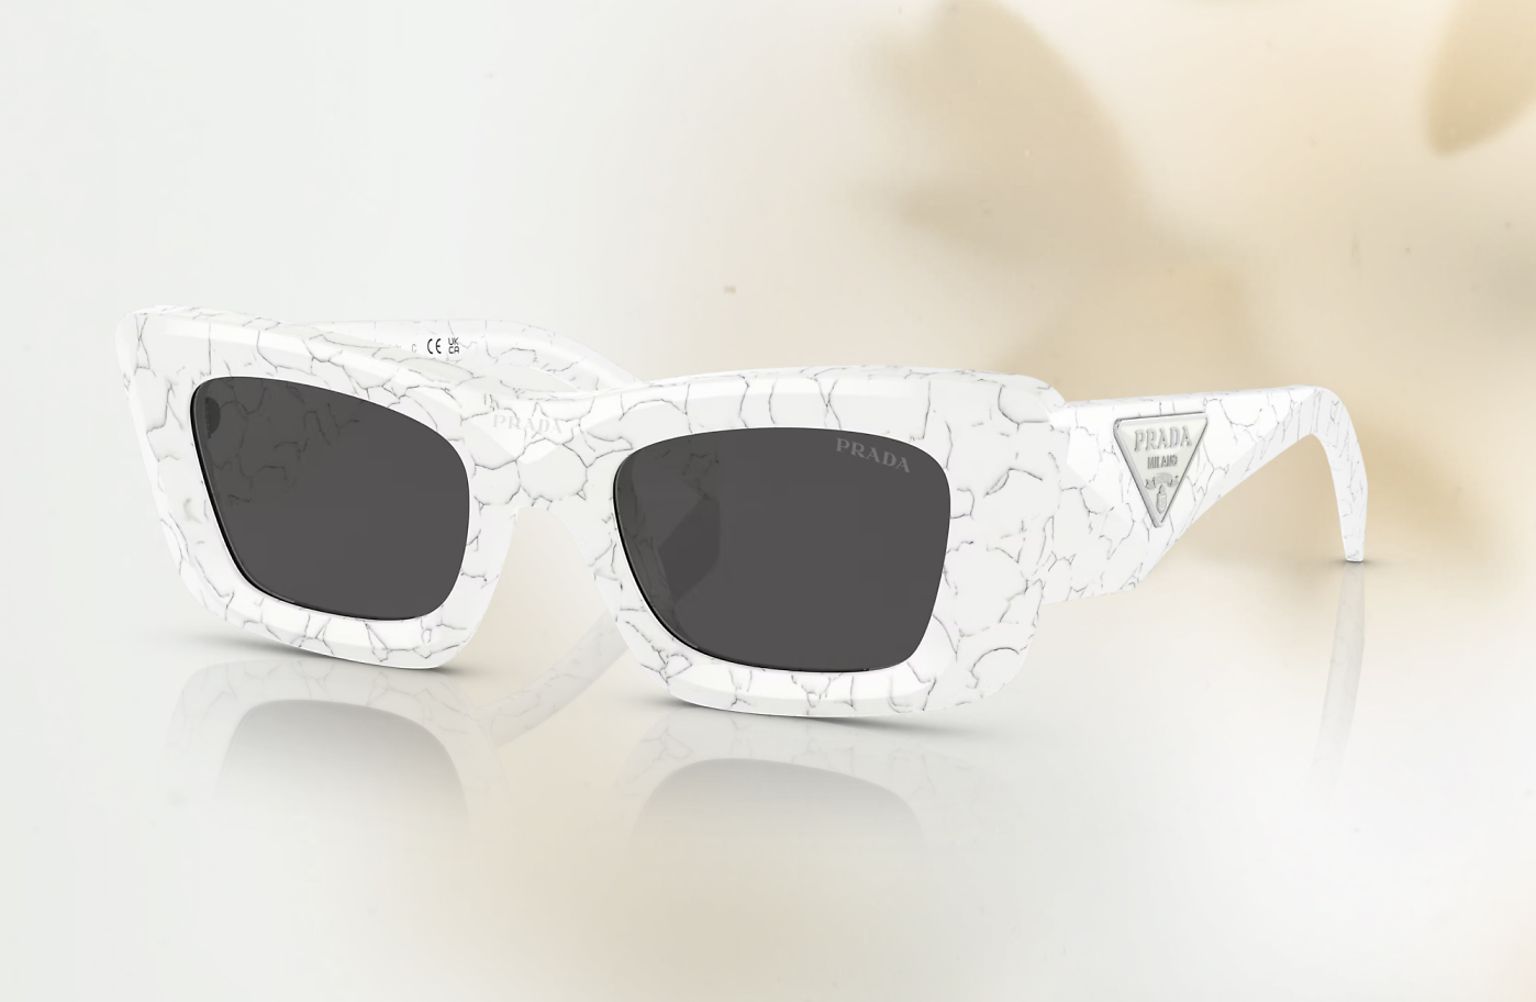 Maui Jim Makoa 804 Sunglasses: 804-02, B804-14G, GM804-2M, H804-25W,  HT804-15M - Flight Sunglasses